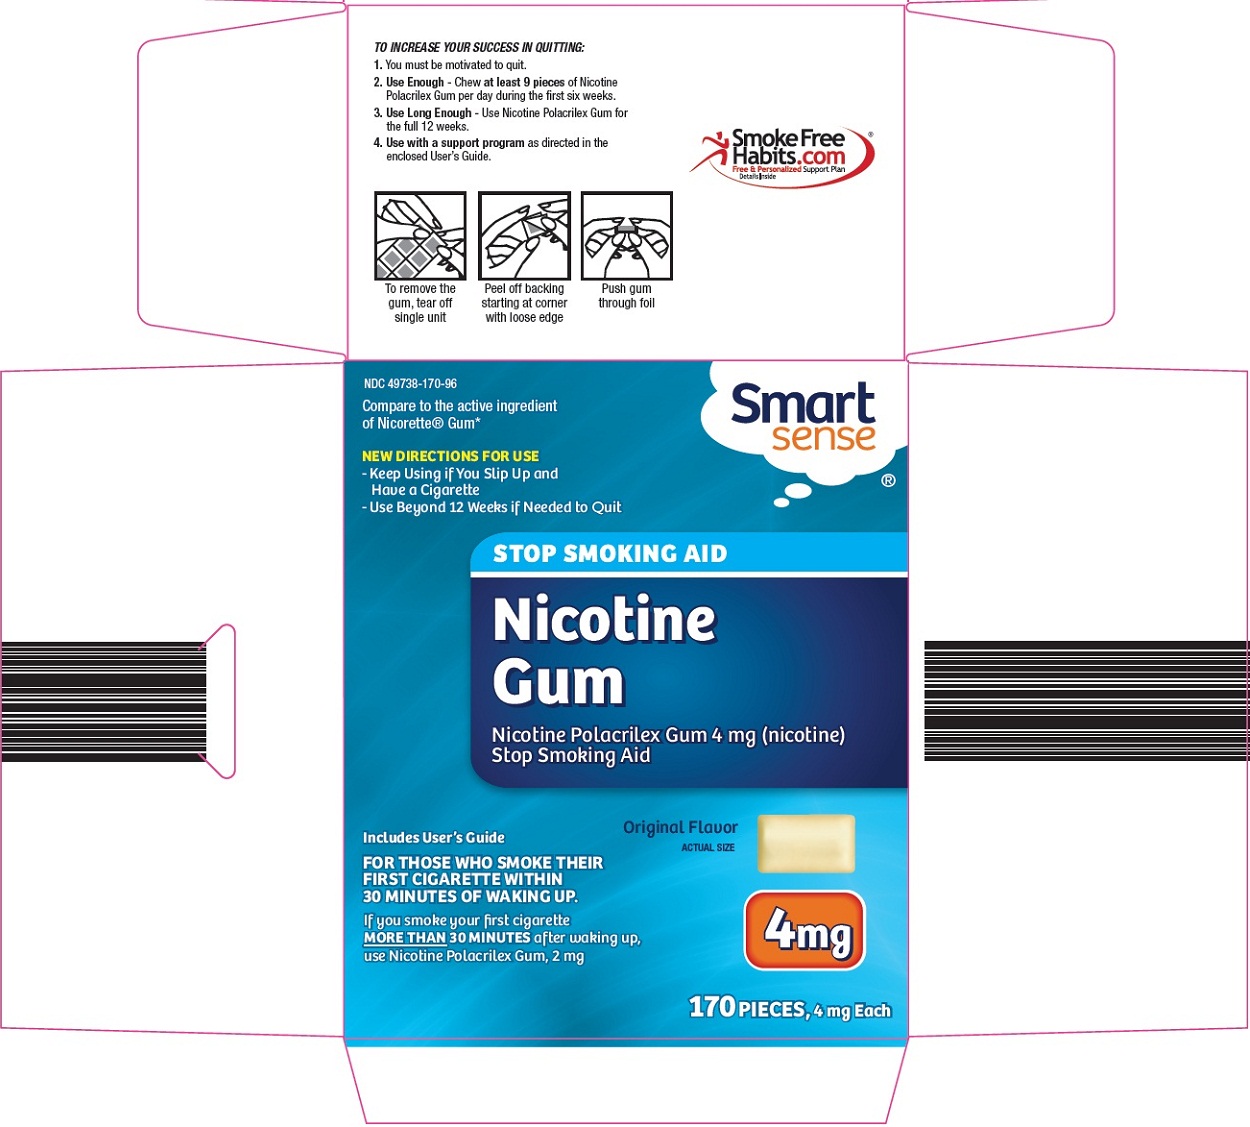 Smart Sense Nicotine Gum Image 1